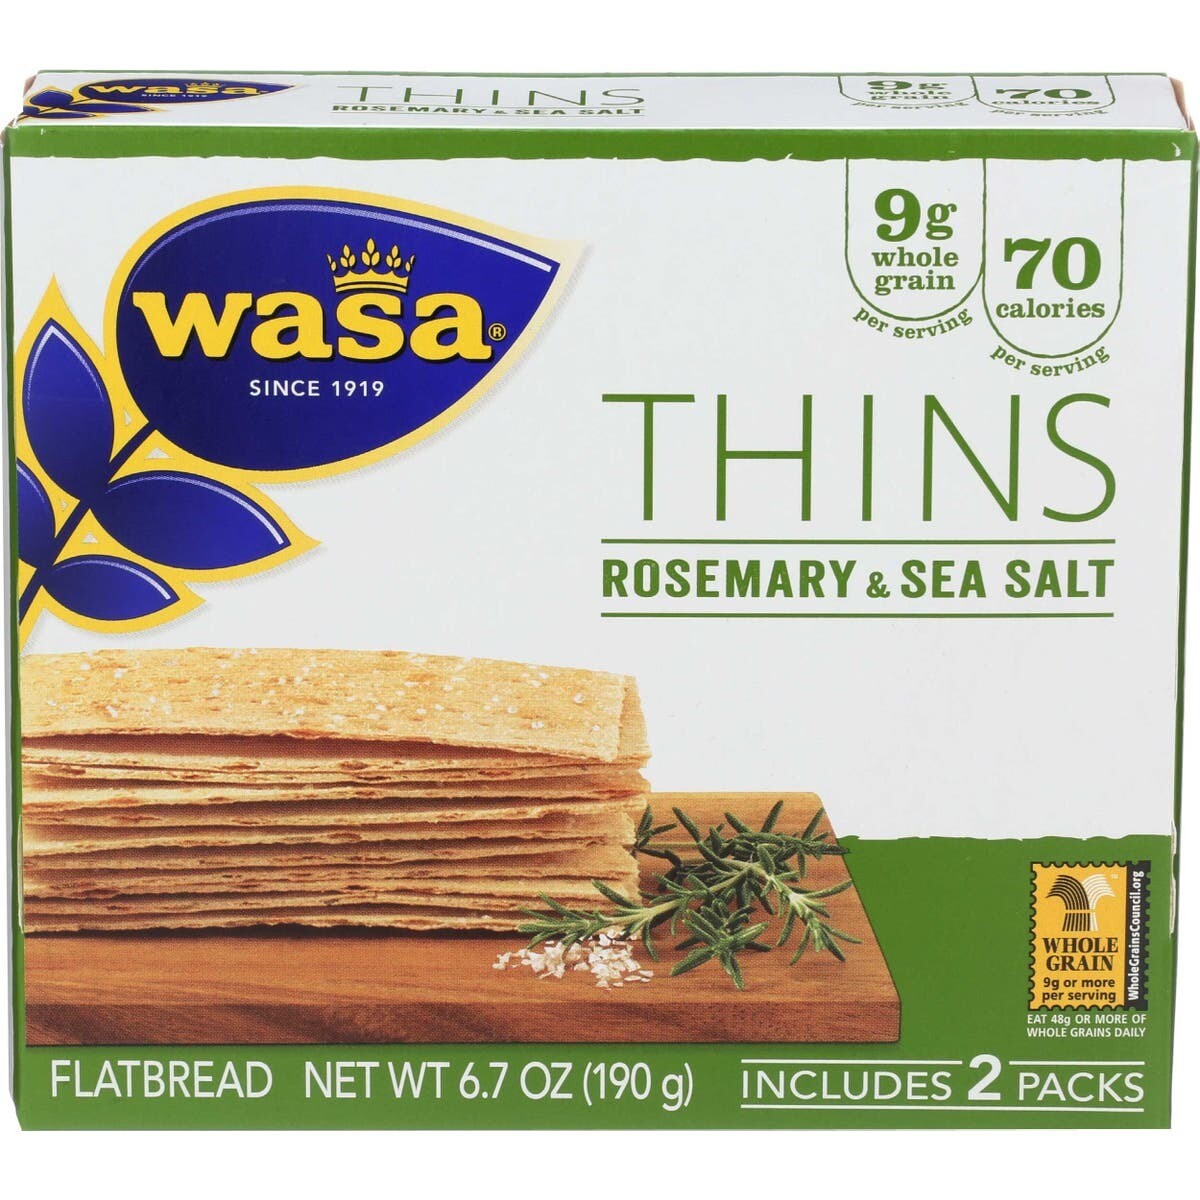 Wasa rosemary & sea salt flatbread crackers 6.7 oz